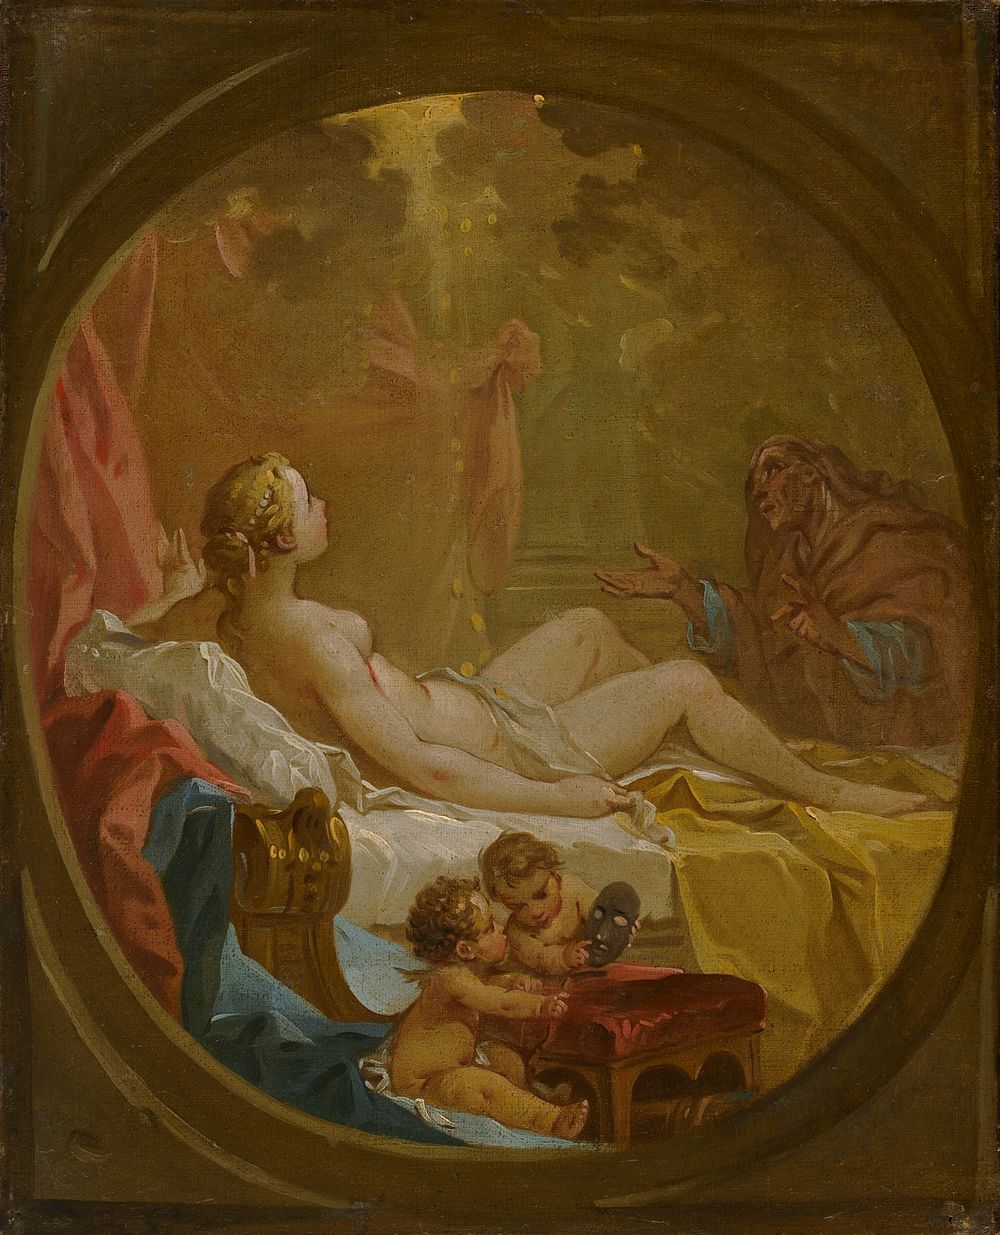 Dana&euml;, 1723 - 1770, Fran&ccedil;ois Boucher